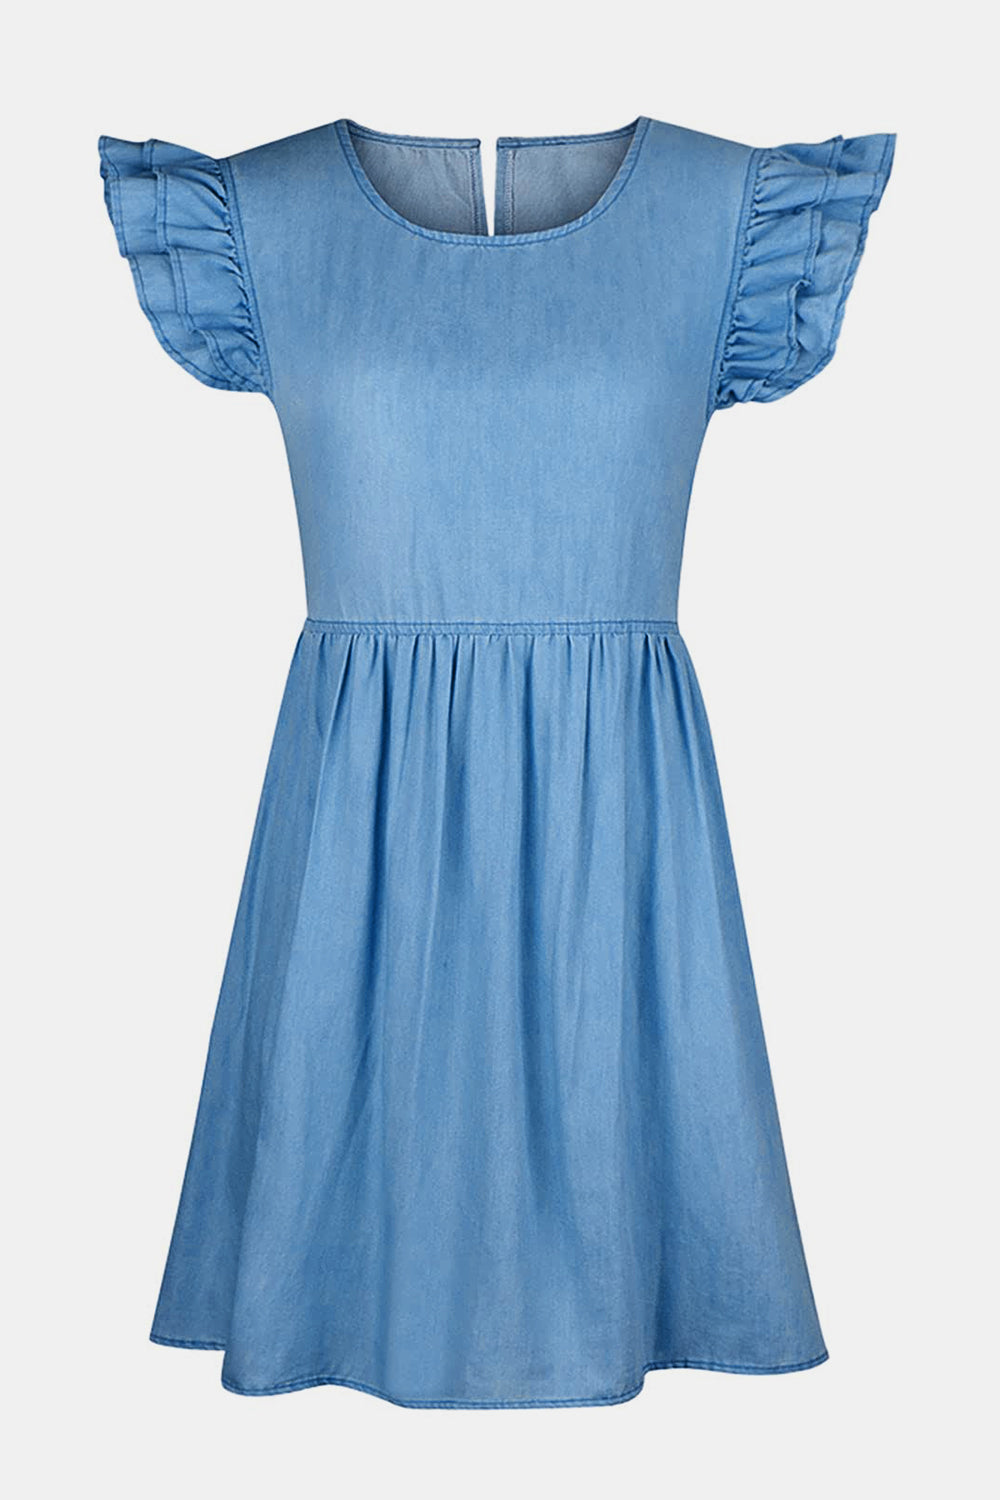 Blue Zone Planet |  Clara's Full Size Ruffled Round Neck Cap Sleeve Denim Mini Dress BLUE ZONE PLANET